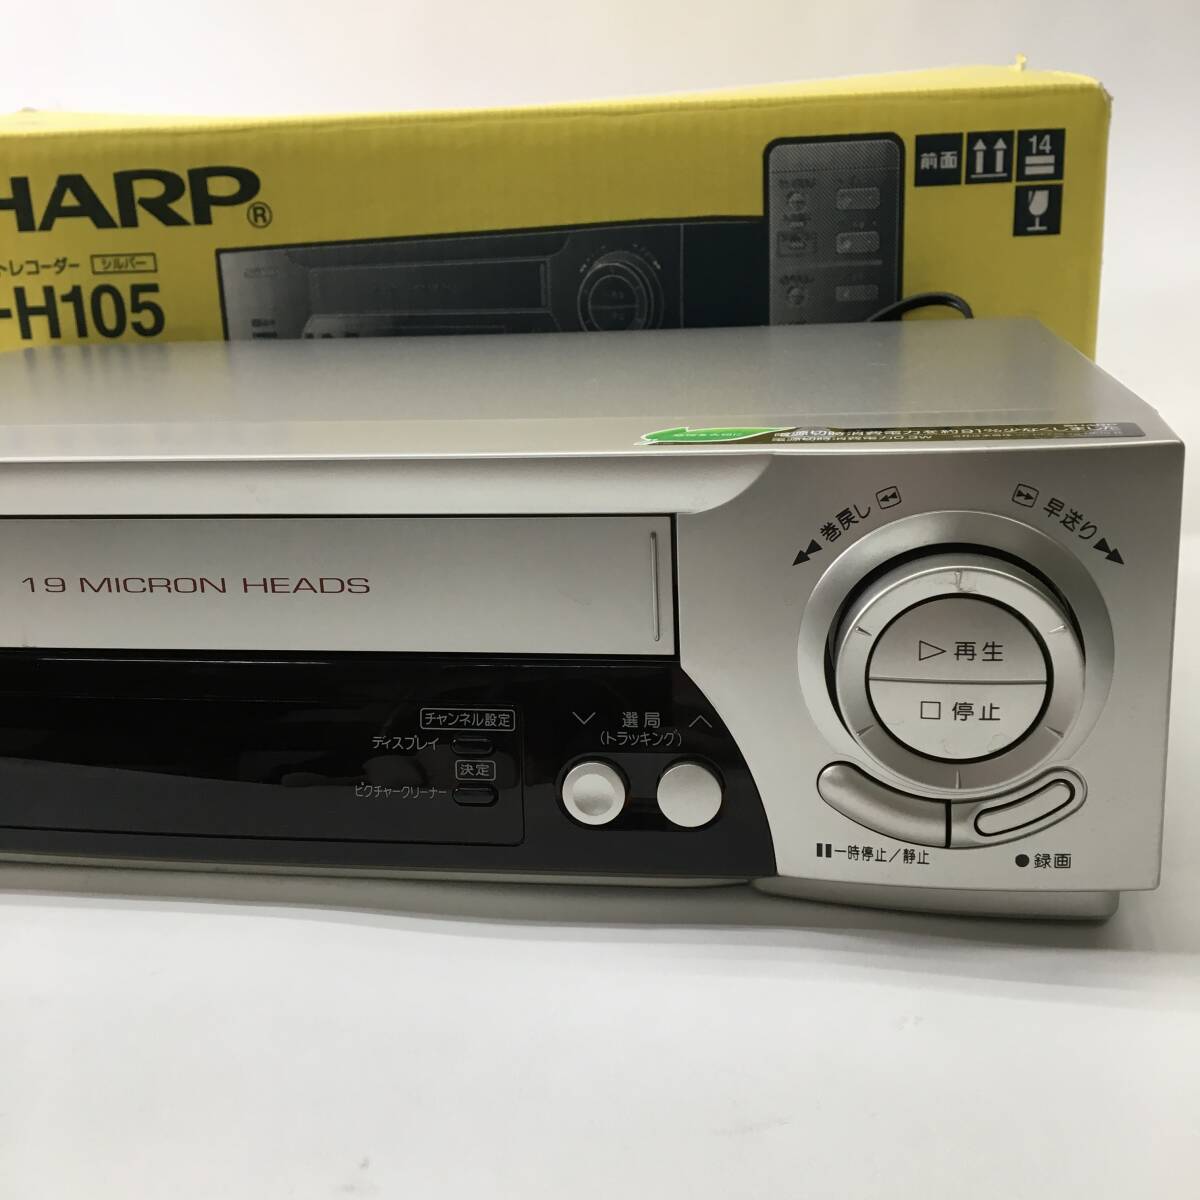 SHARP/シャープ ビデオカセットレコーダー VC-H105 VHS ビデオデッキ リモコン欠品 動作品 24c菊E_画像3